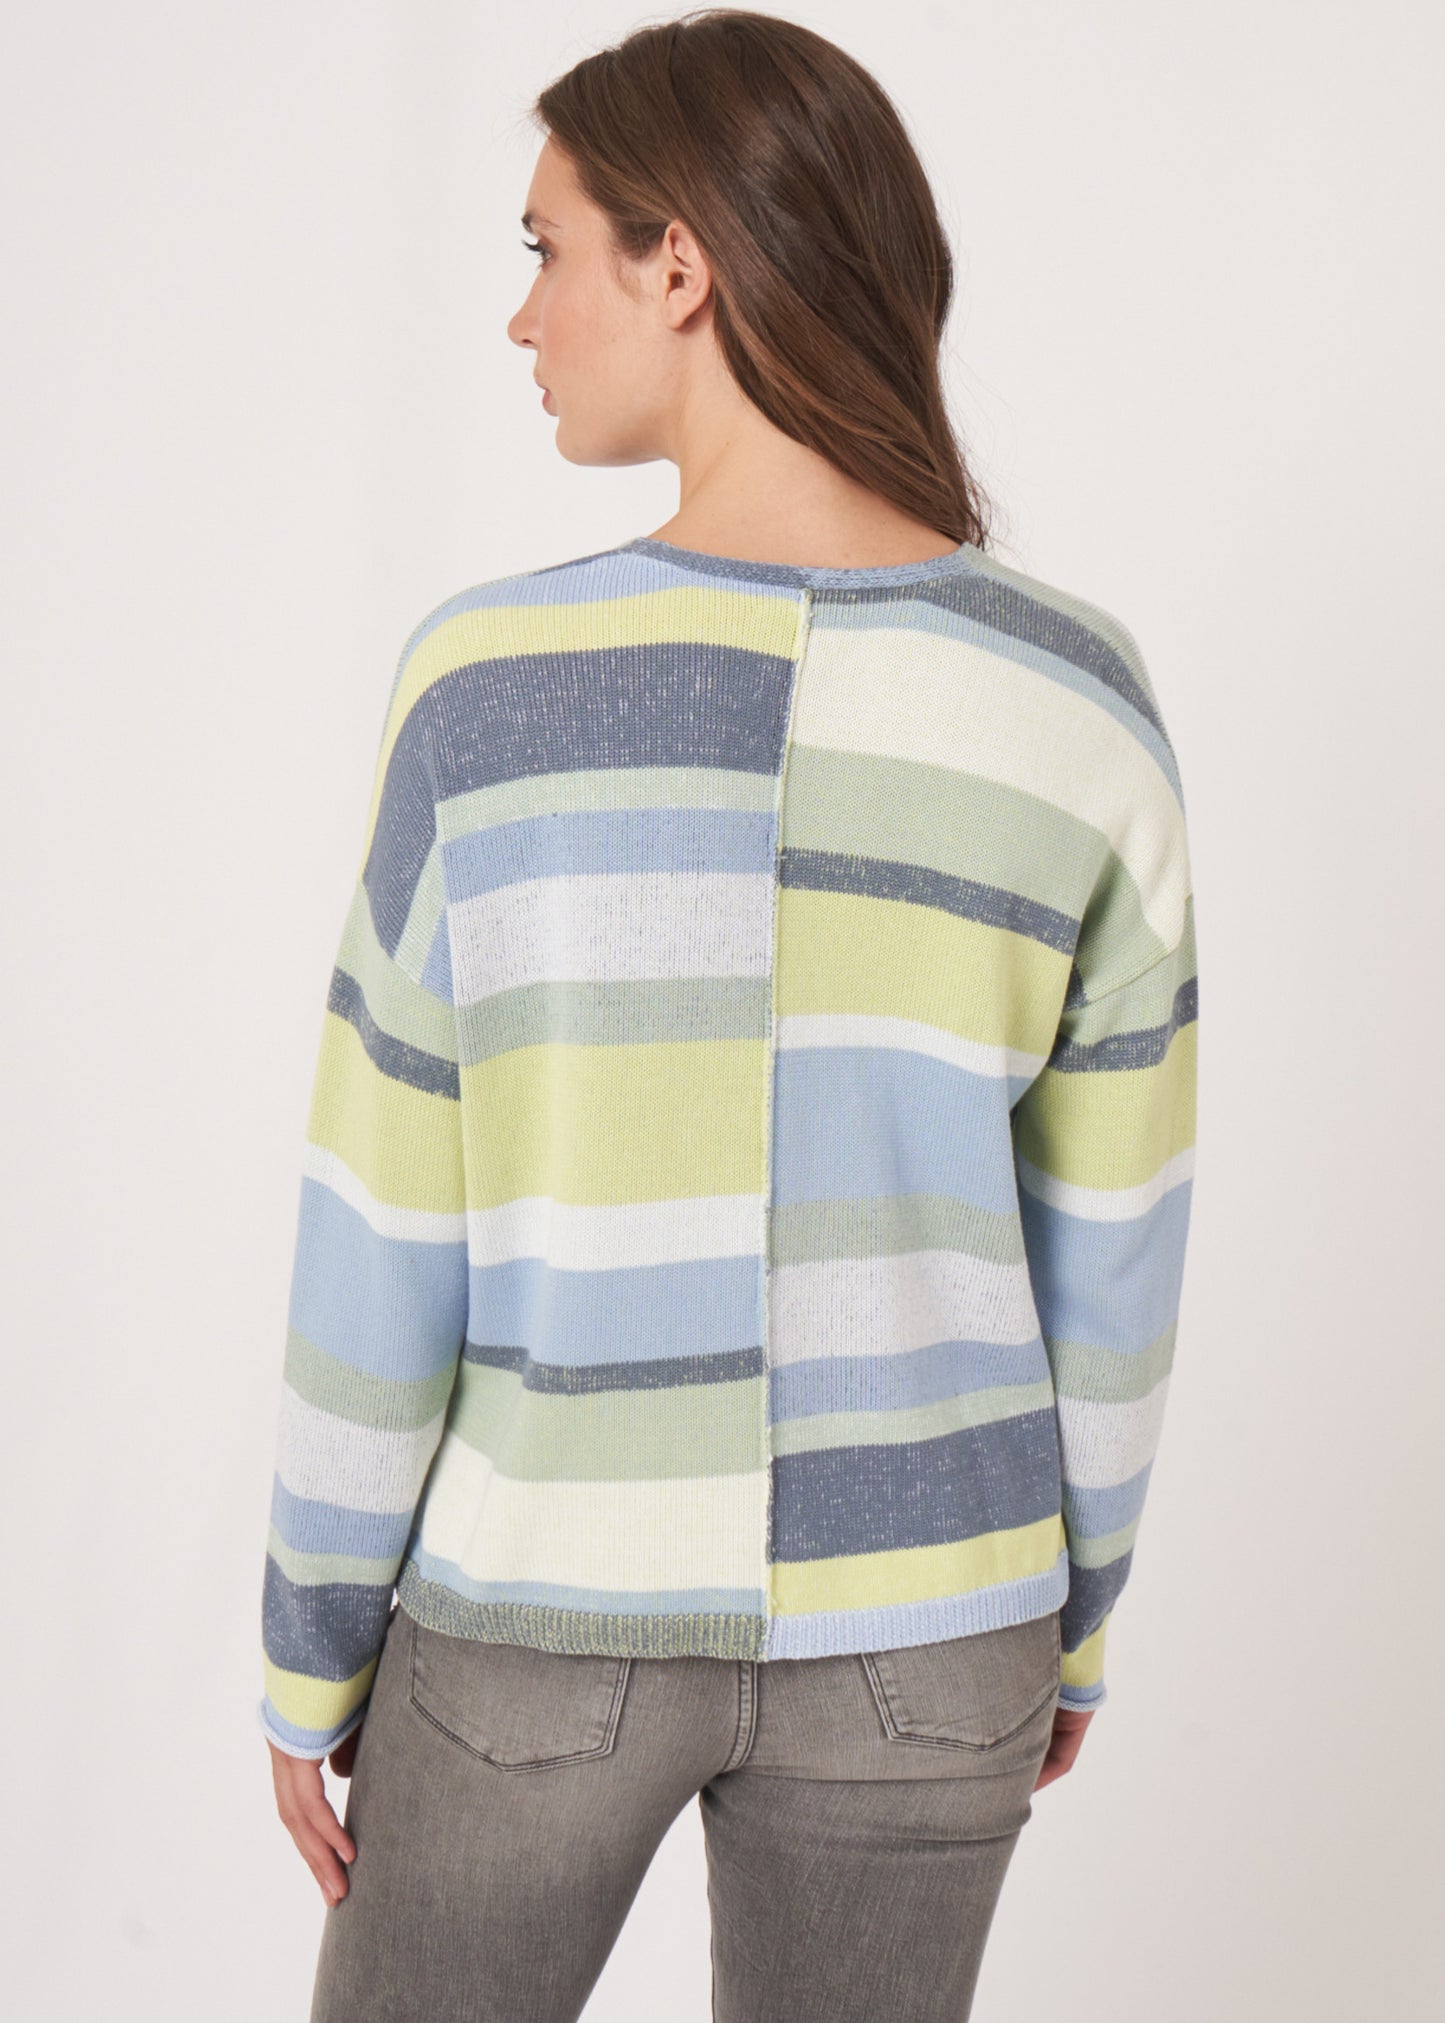 Repeat Denim Multi Color Sweater